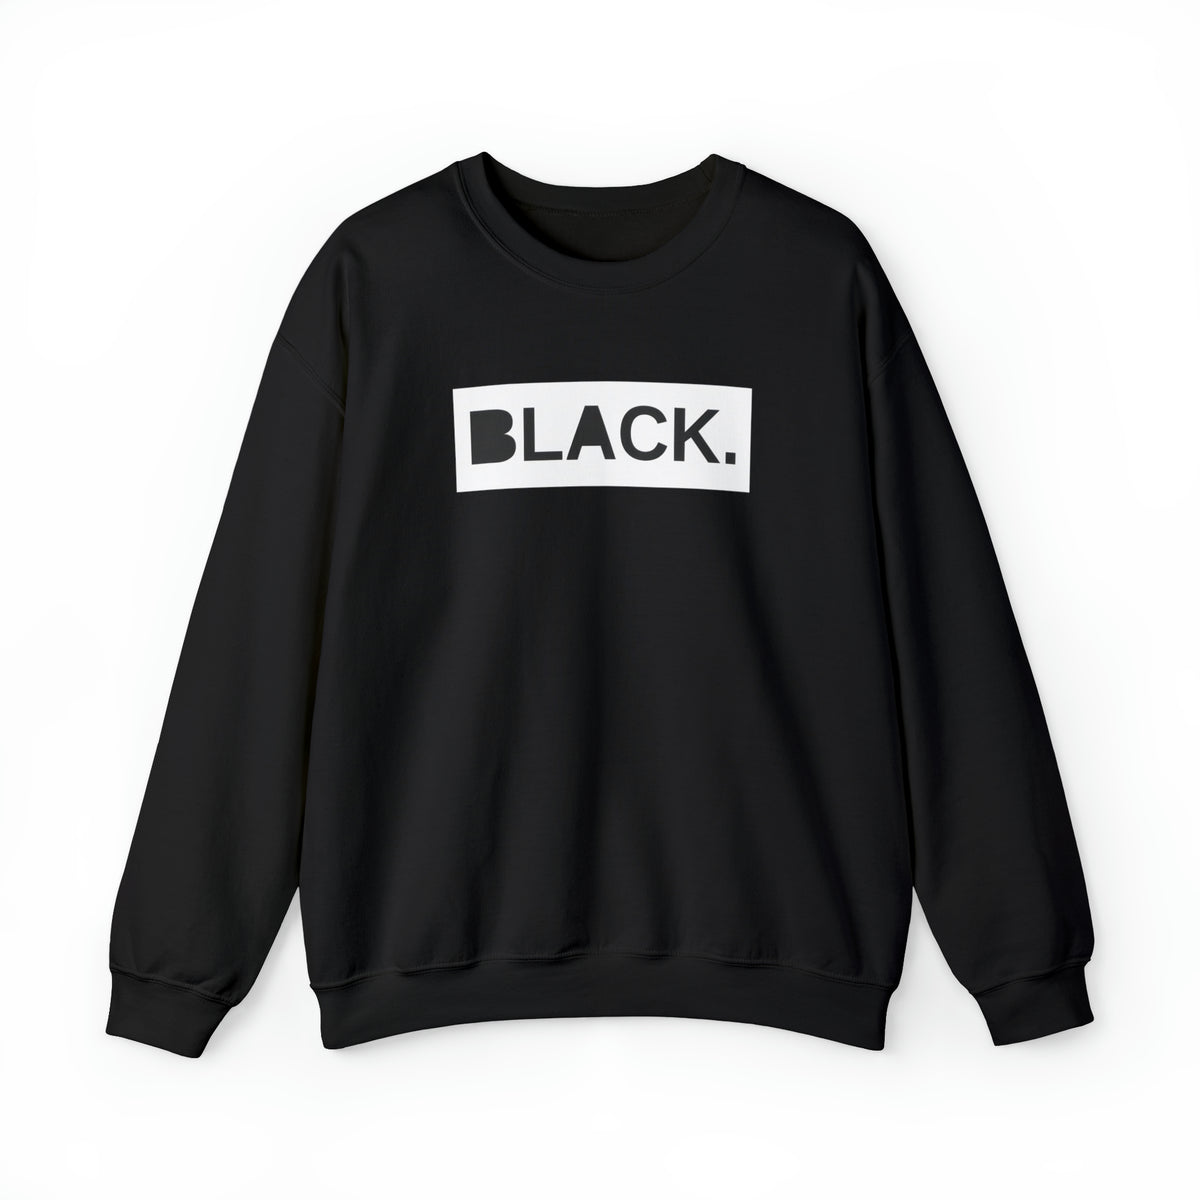 Our BLACK and white Unisex Crewneck Sweatshirt